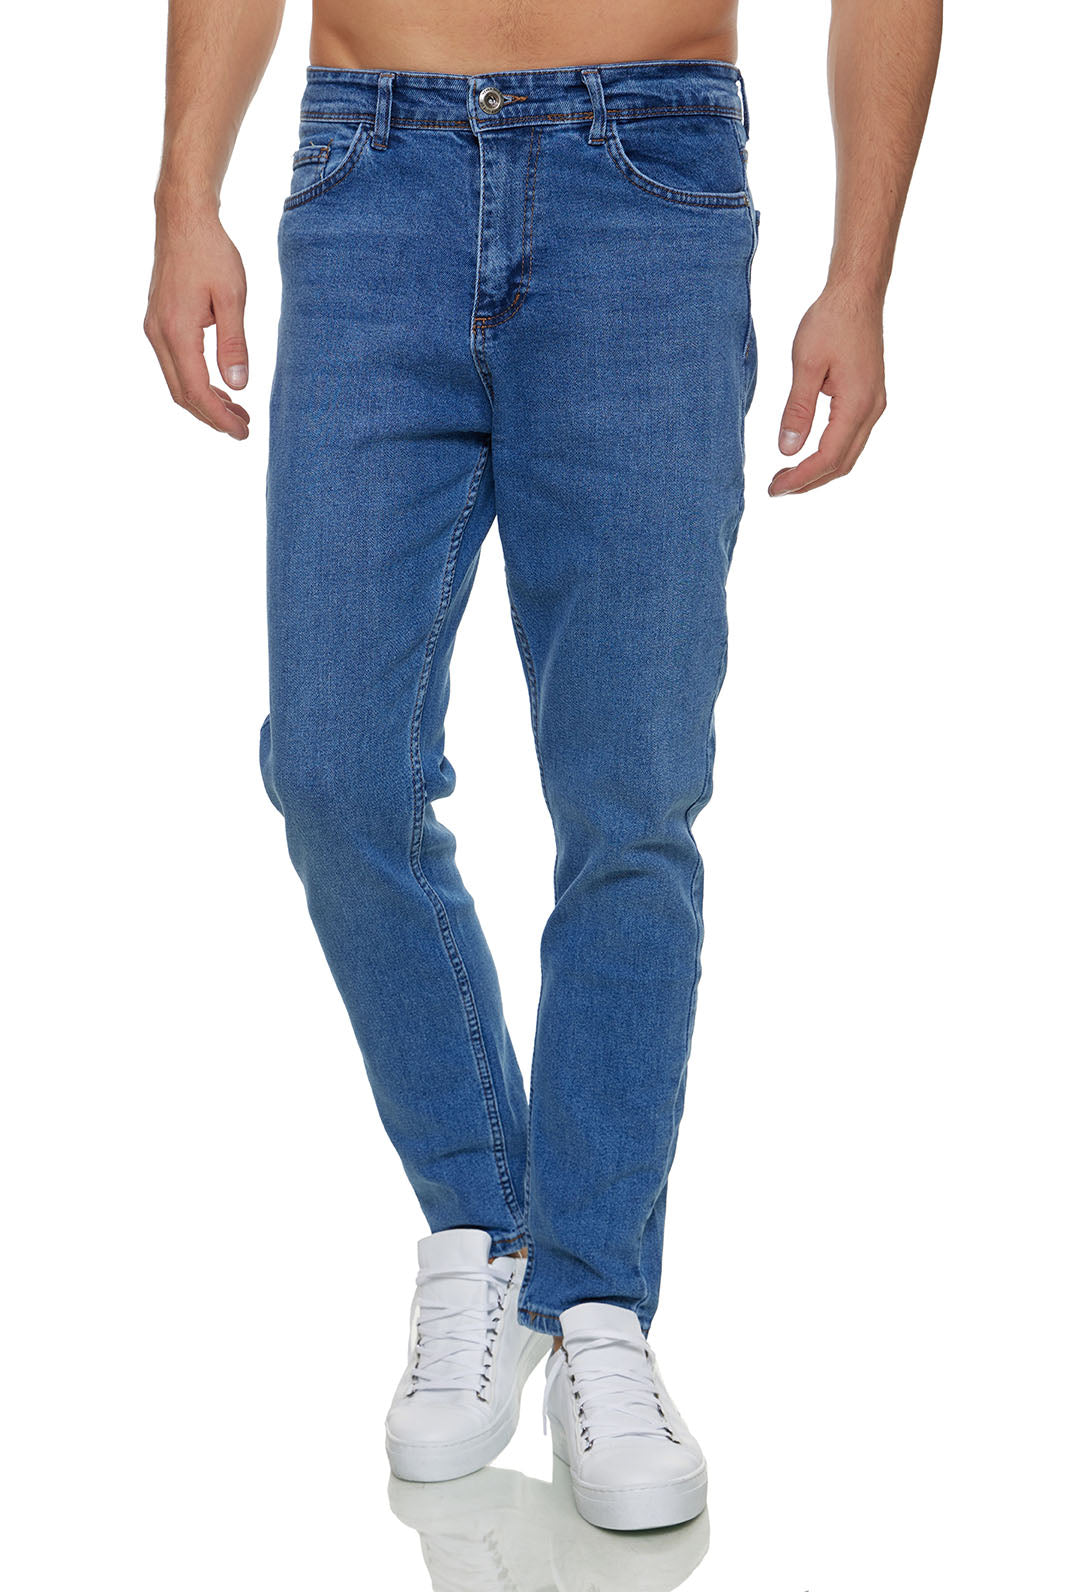 Men\'s Jeans, Mom (Casual) Fit, Model I8-16150, Light Blue or Blue – Denim  Fabrik